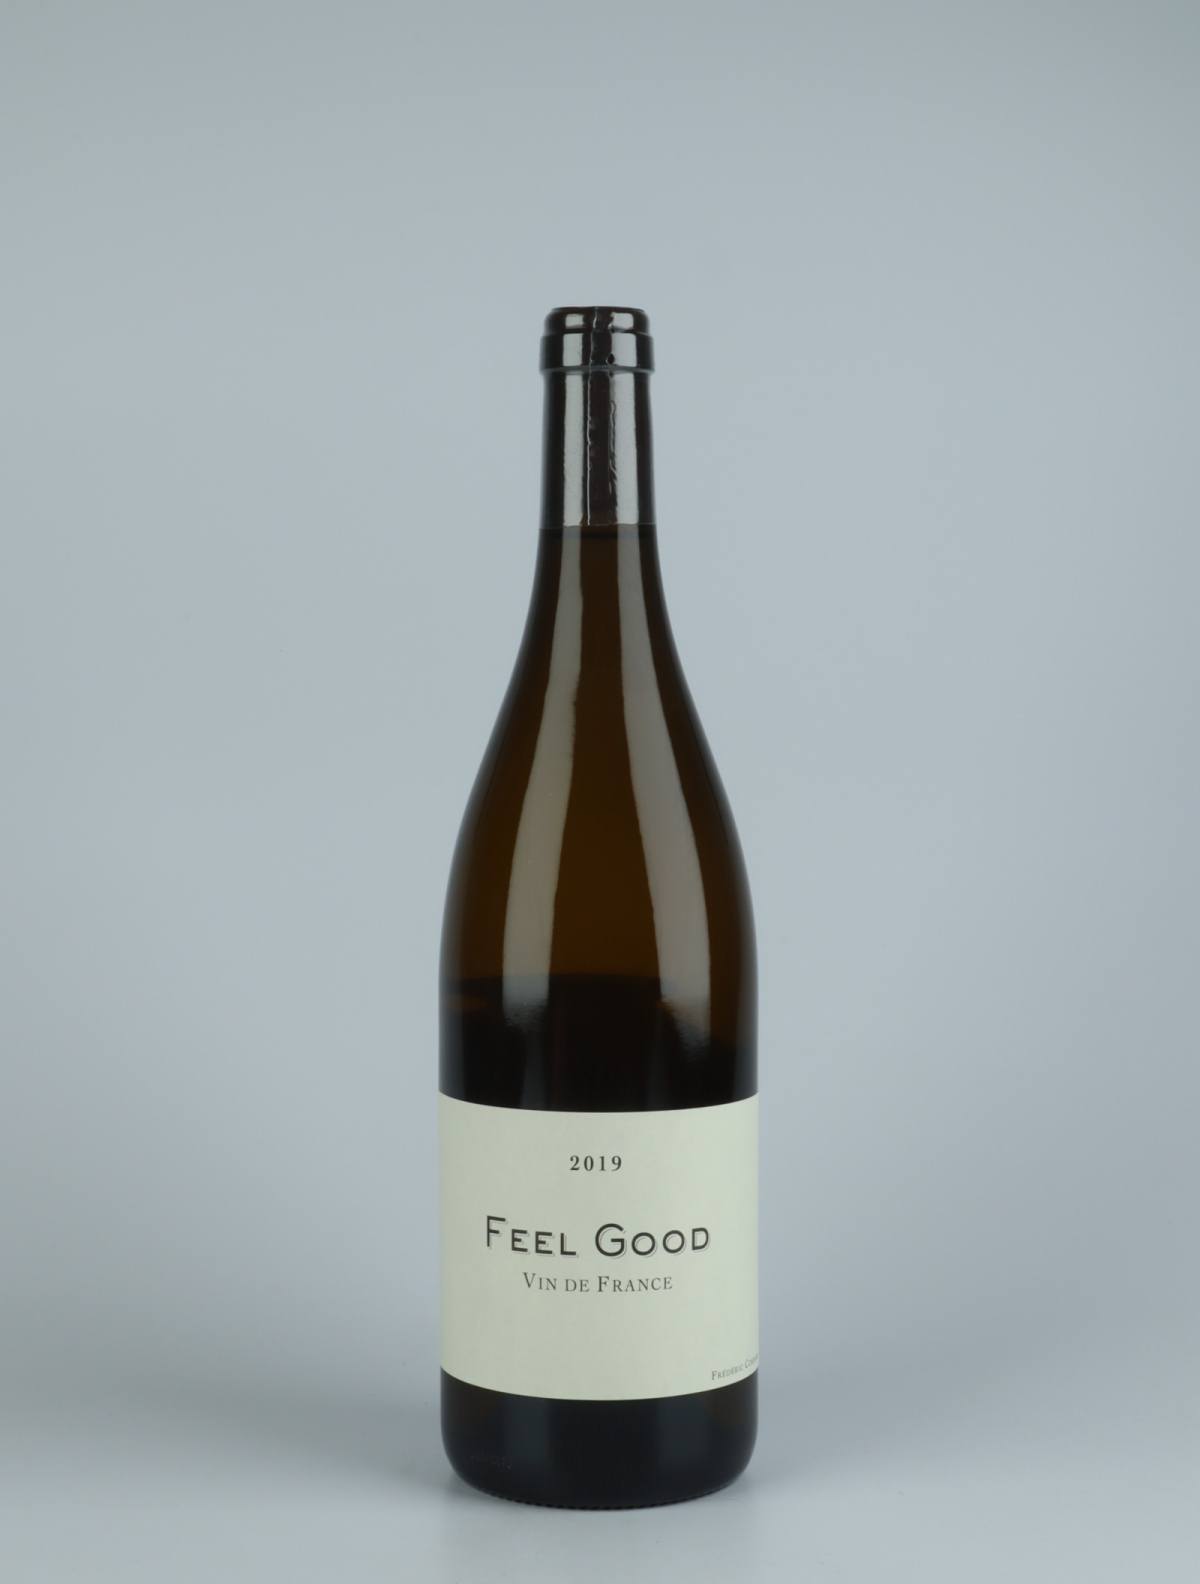 A bottle 2019 Feel Good - Qvevris White wine from Frédéric Cossard, Burgundy in France